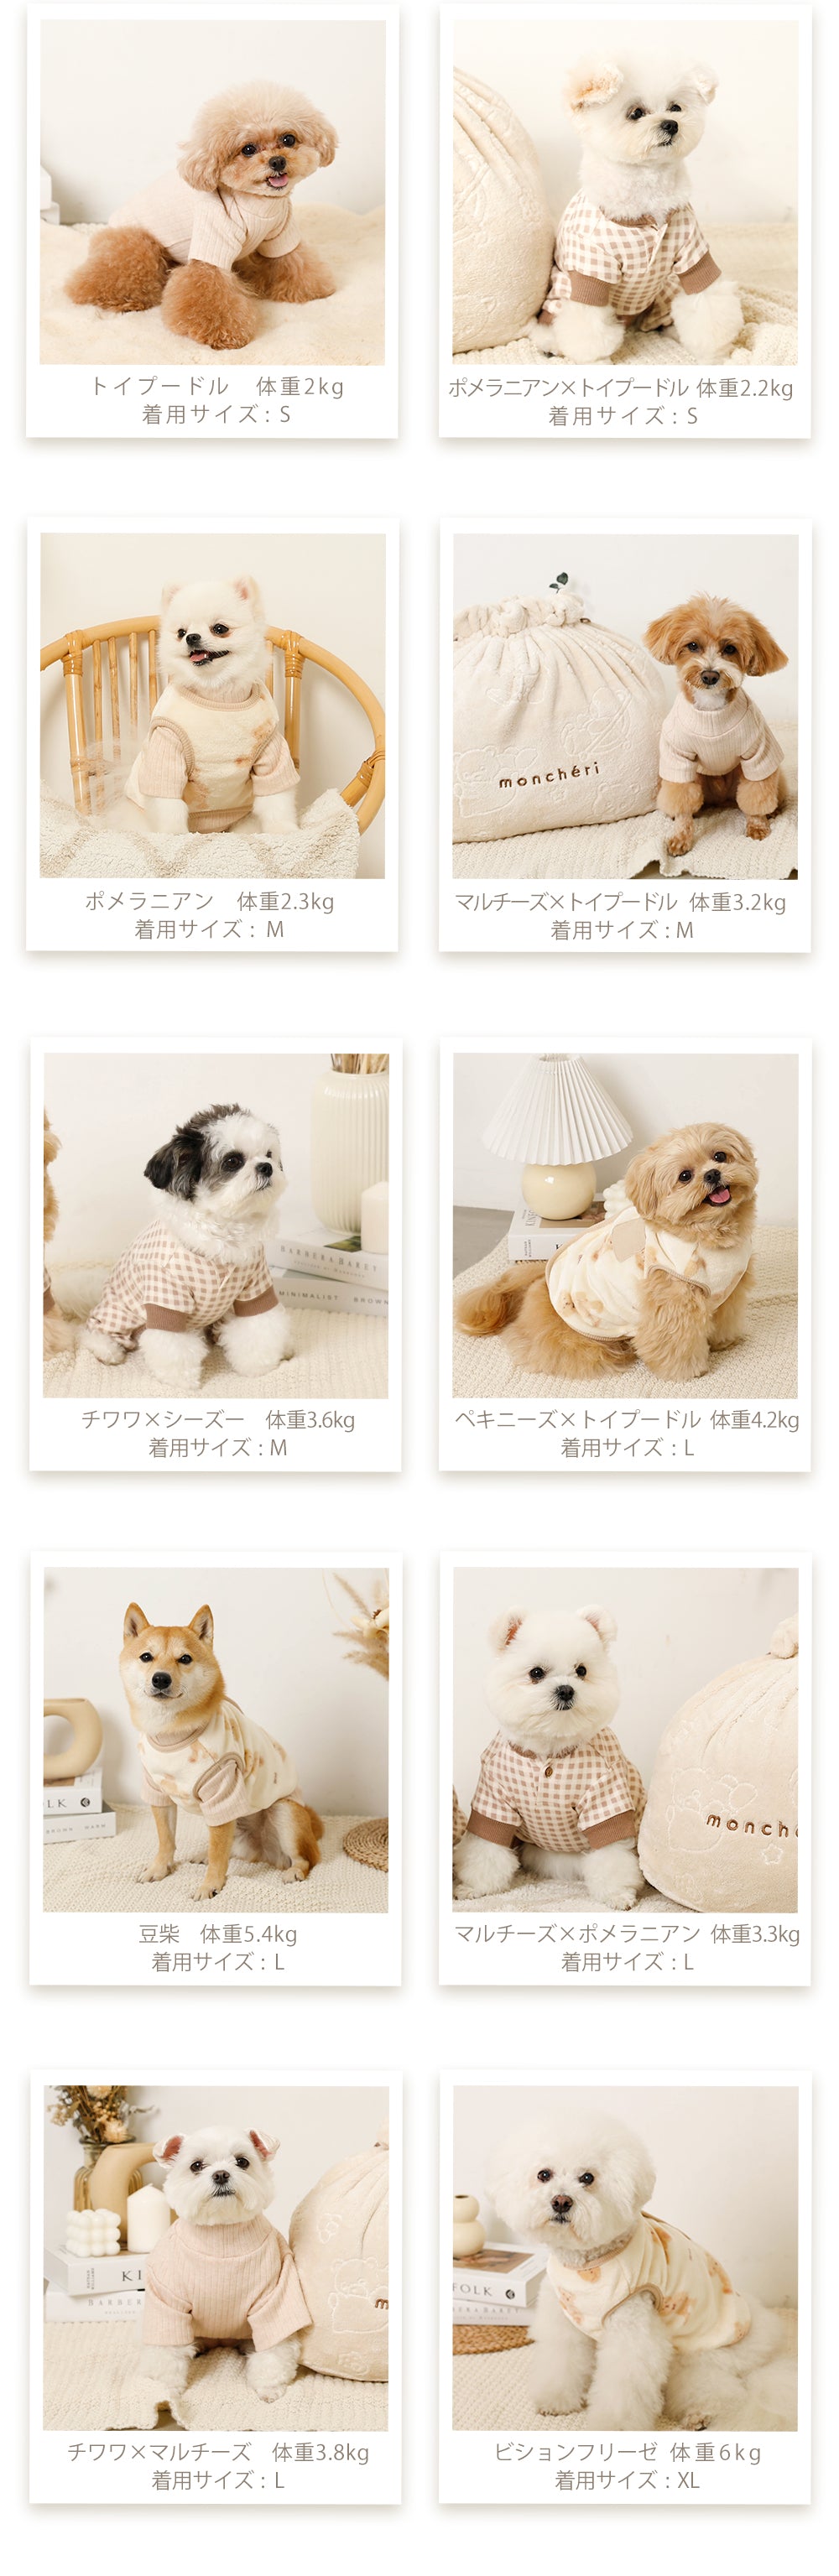 Small dog/lucky bag/Happy bag/thumbnail/model list